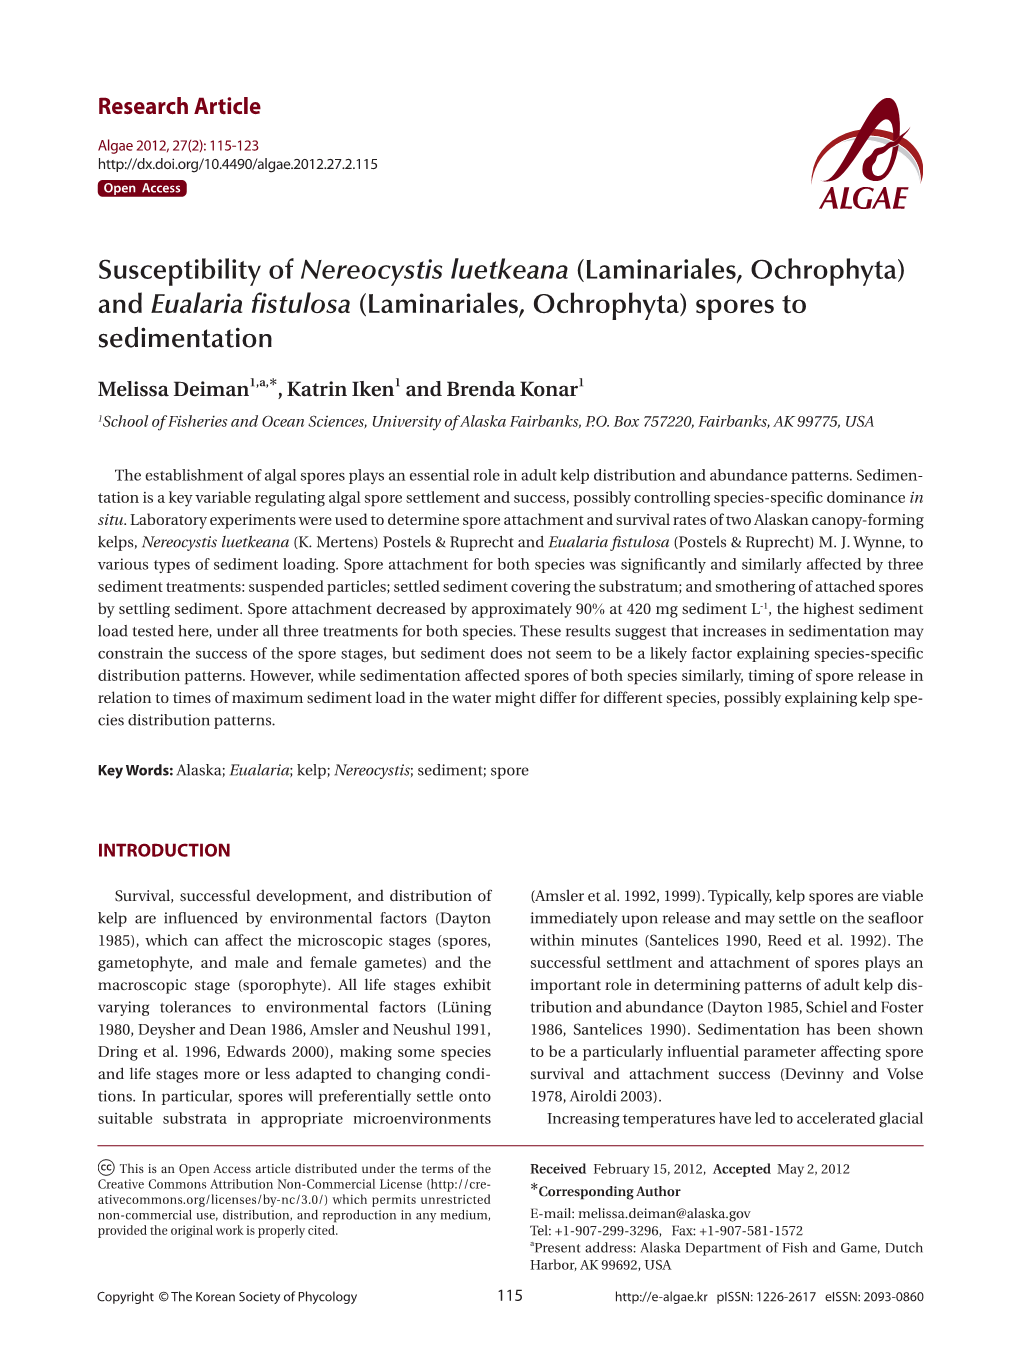 Susceptibility of Nereocystis Luetkeana (Laminariales, Ochrophyta) and Eualaria Fistulosa (Laminariales, Ochrophyta) Spores to Sedimentation